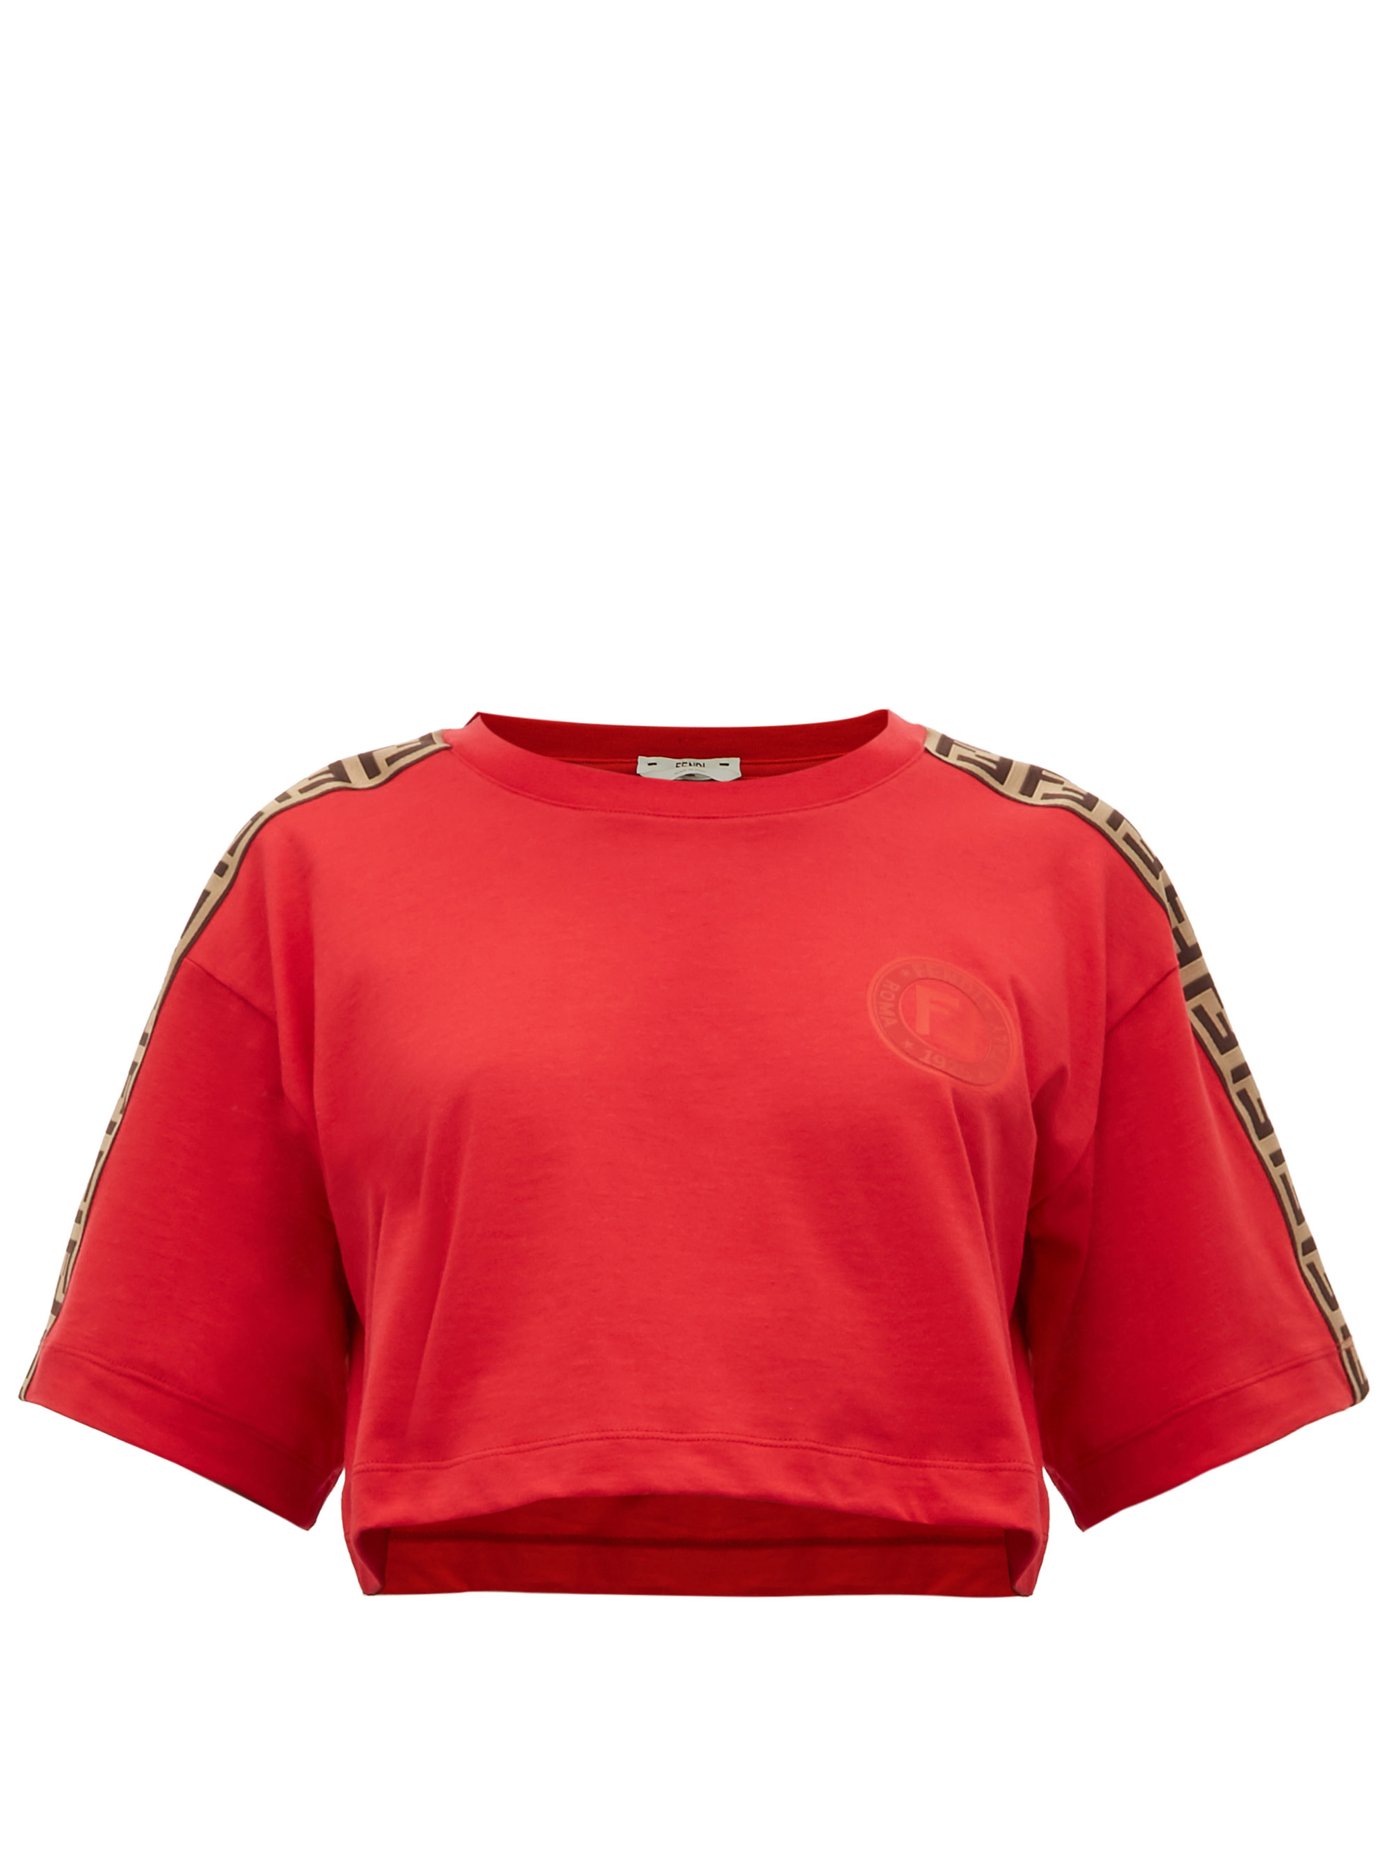 fendi red shirt